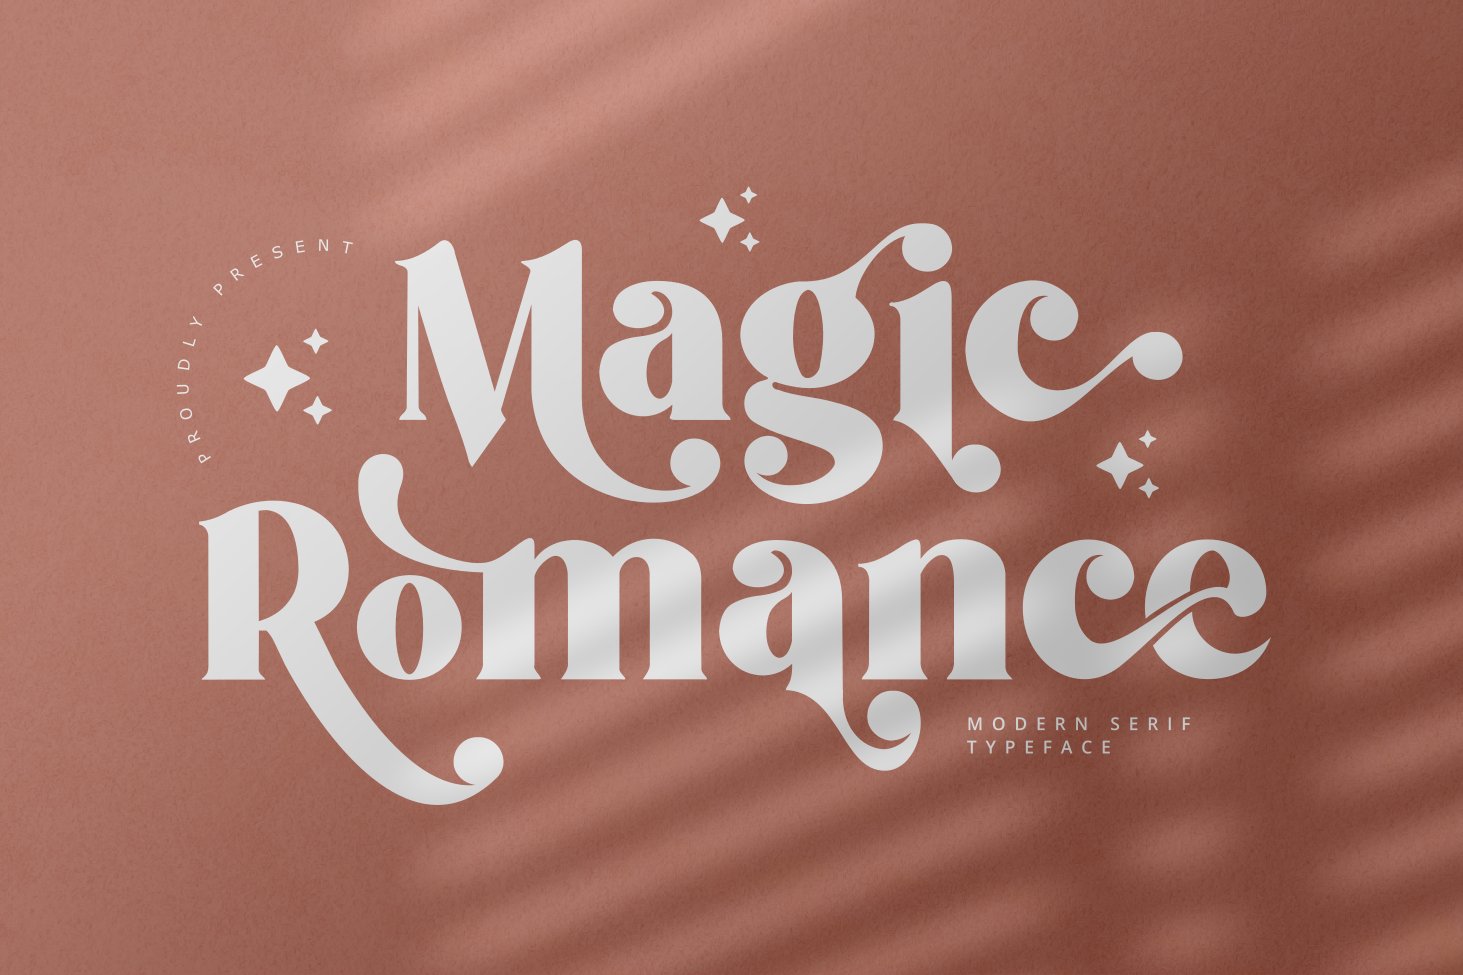 Magic Romance - Modern Serif Font cover image.